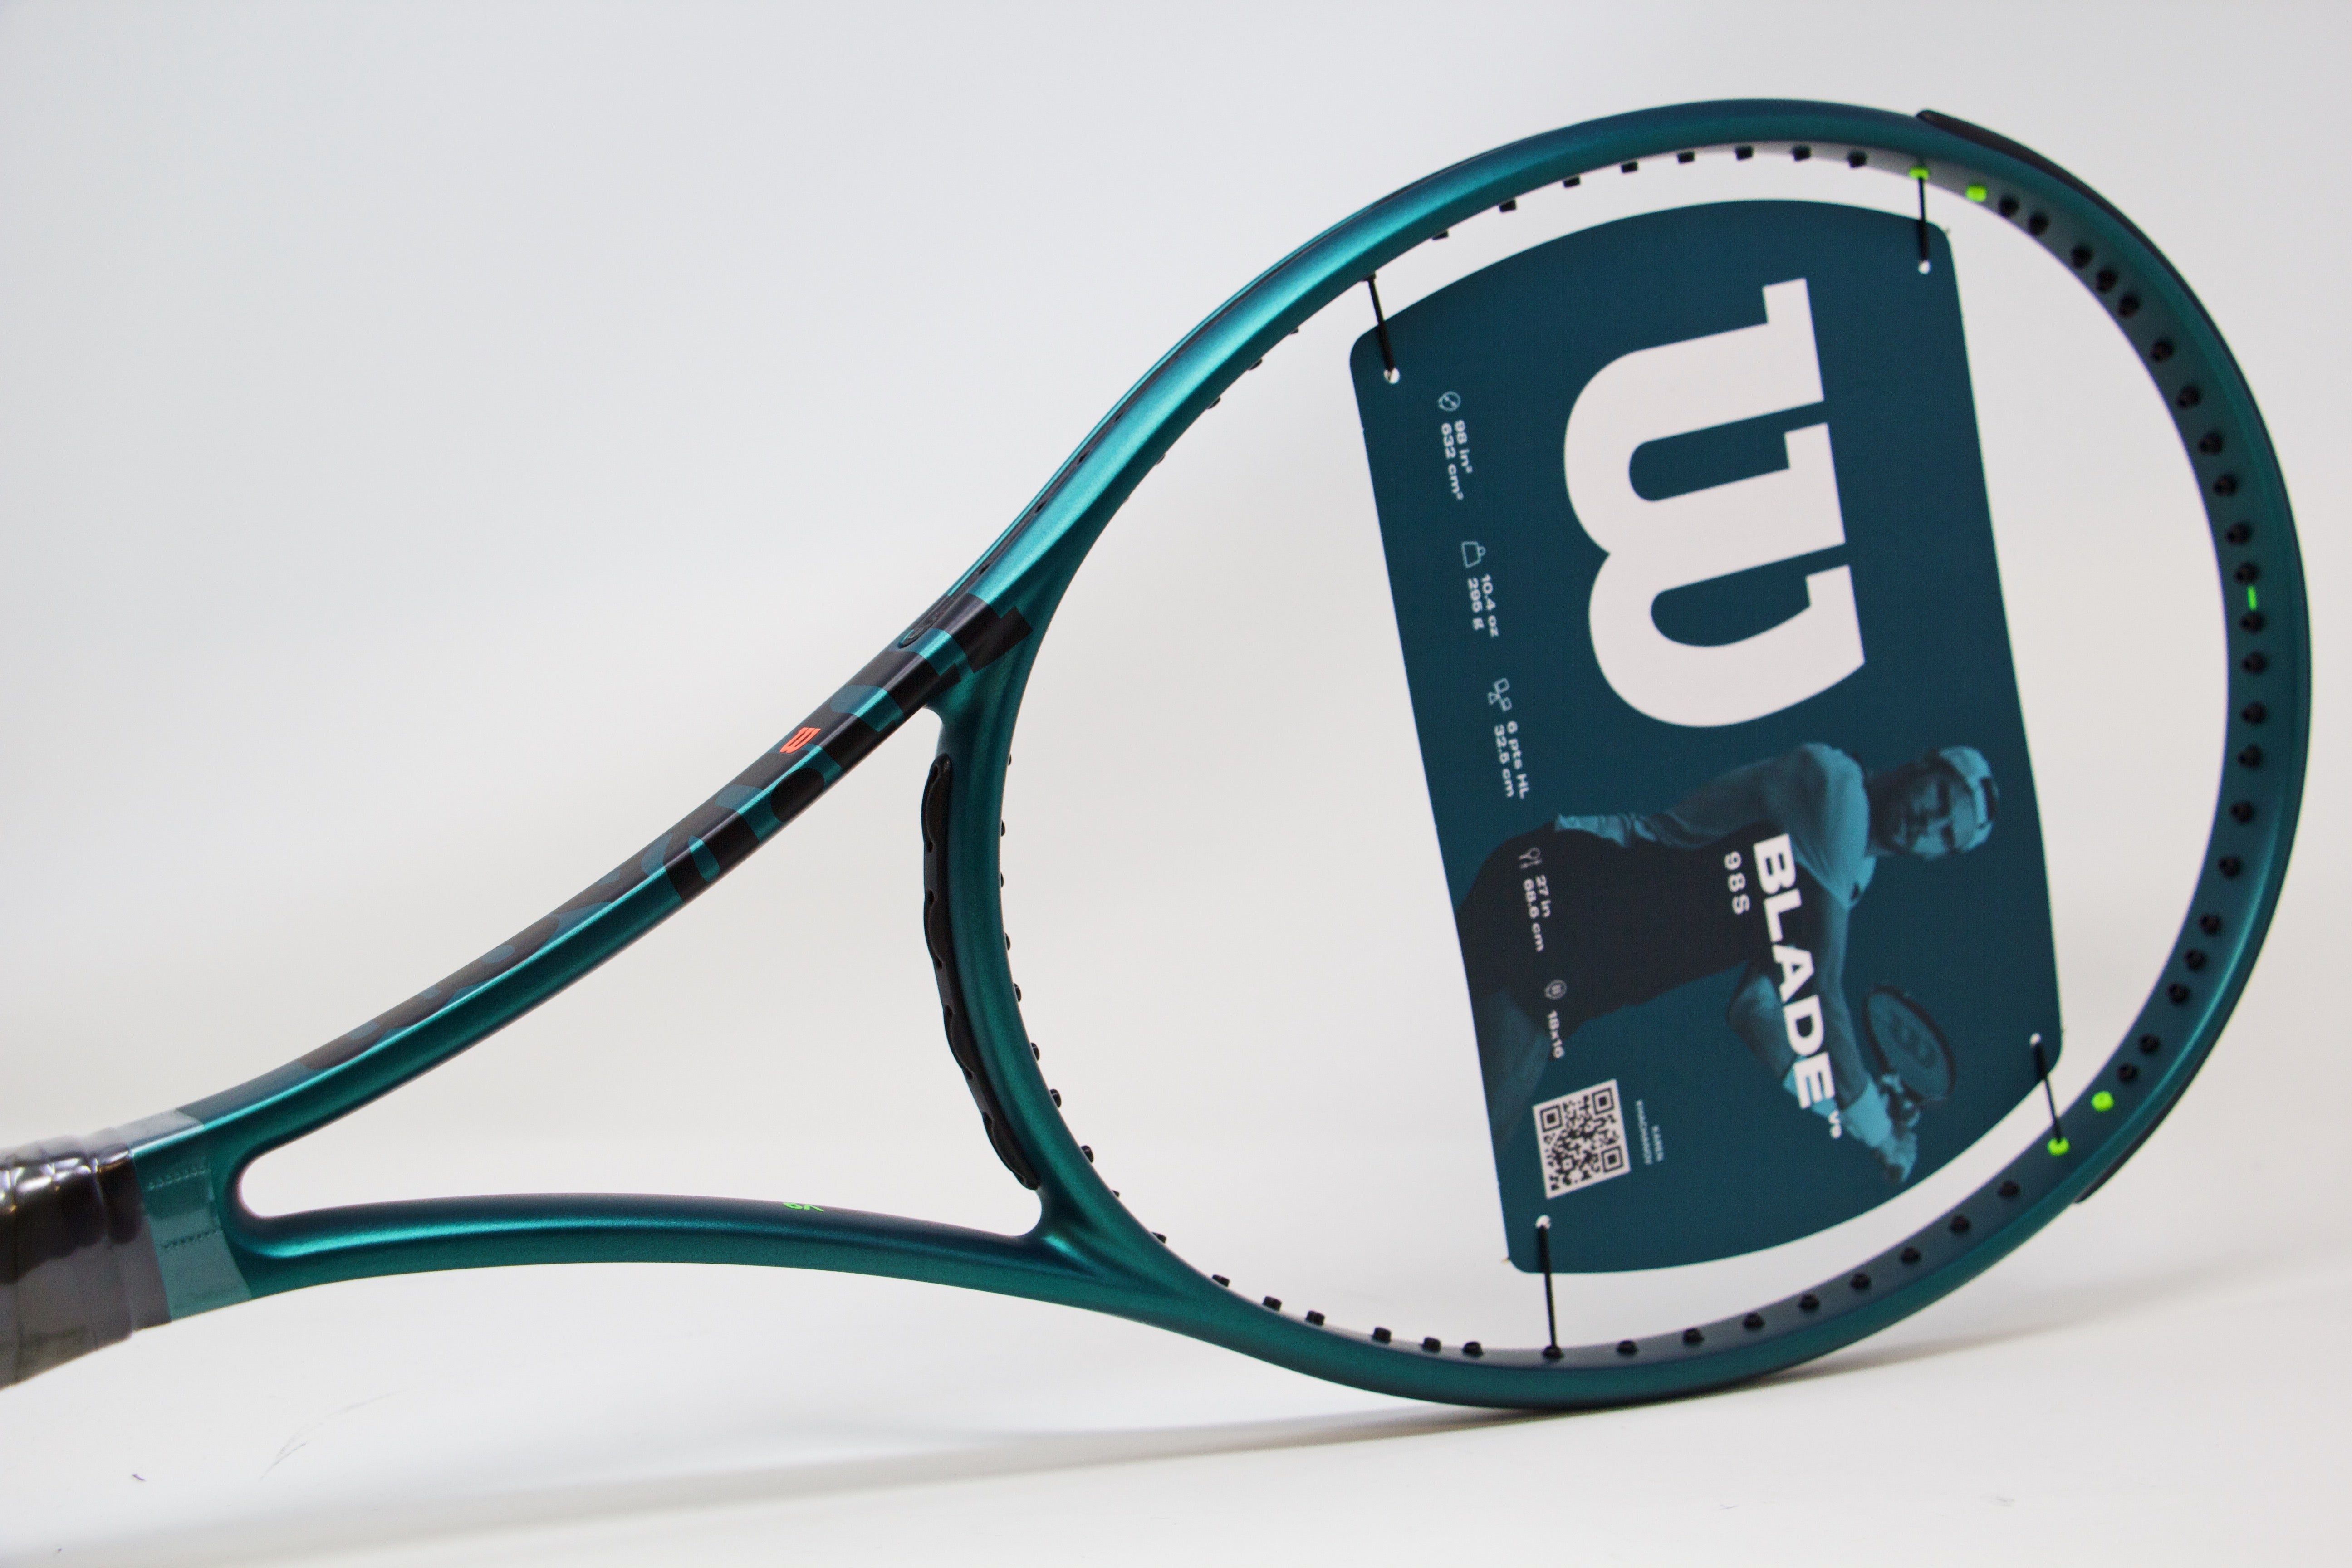 Wilson Blade 98s v9 Tennis Racket